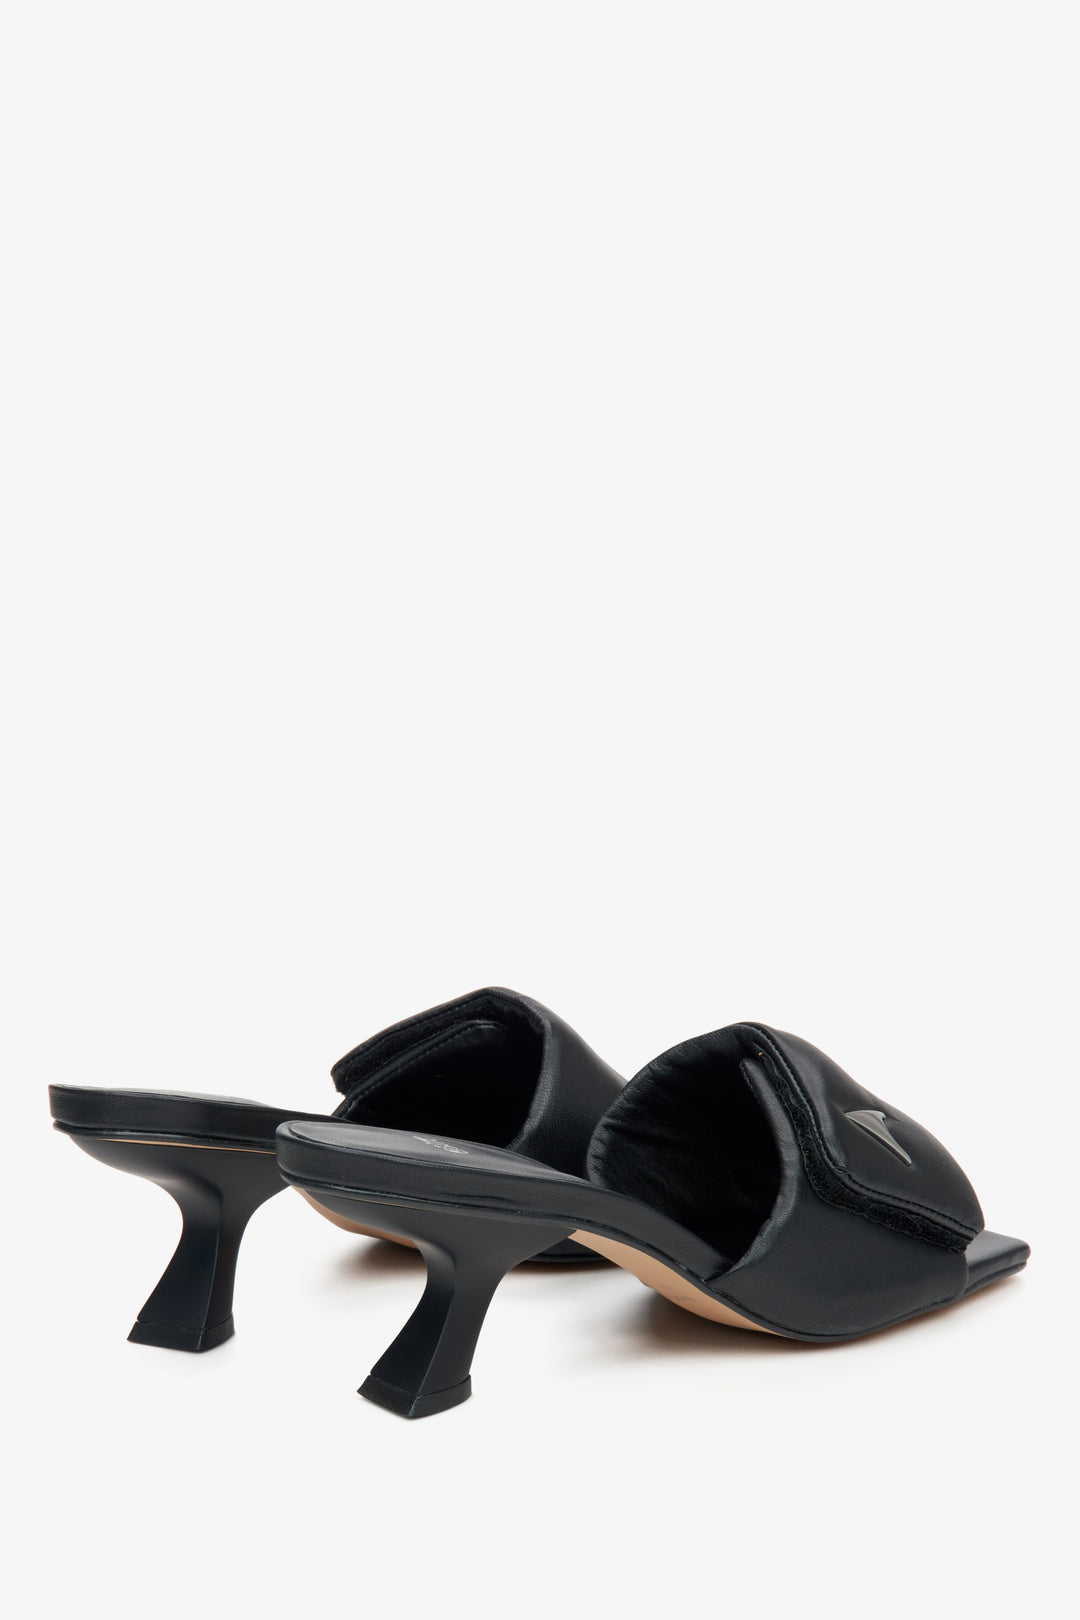 Estro Black Slide Sandals with Funnel Heel for Women